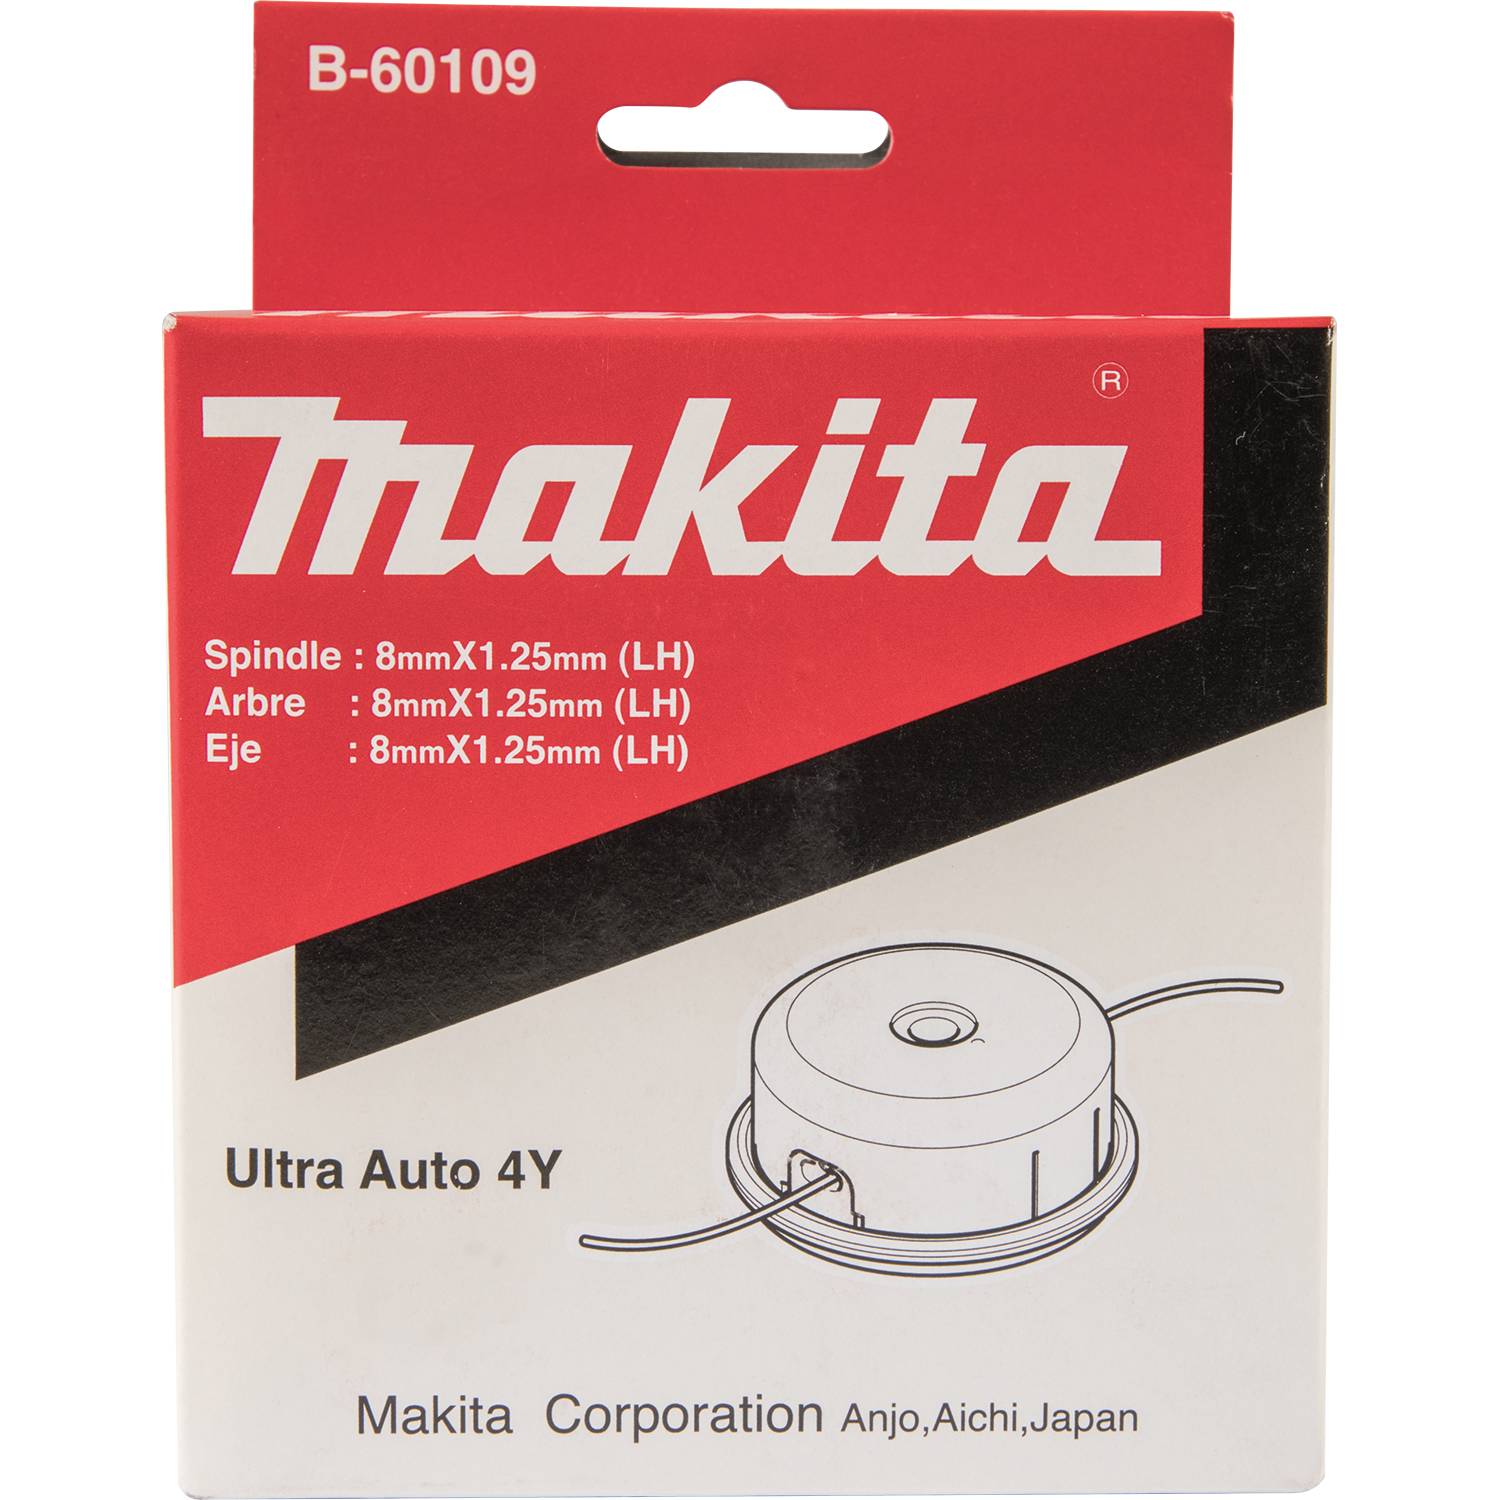 B-60109 Makita Bump & Auto Feed Trimmer Head, Universal LH 4